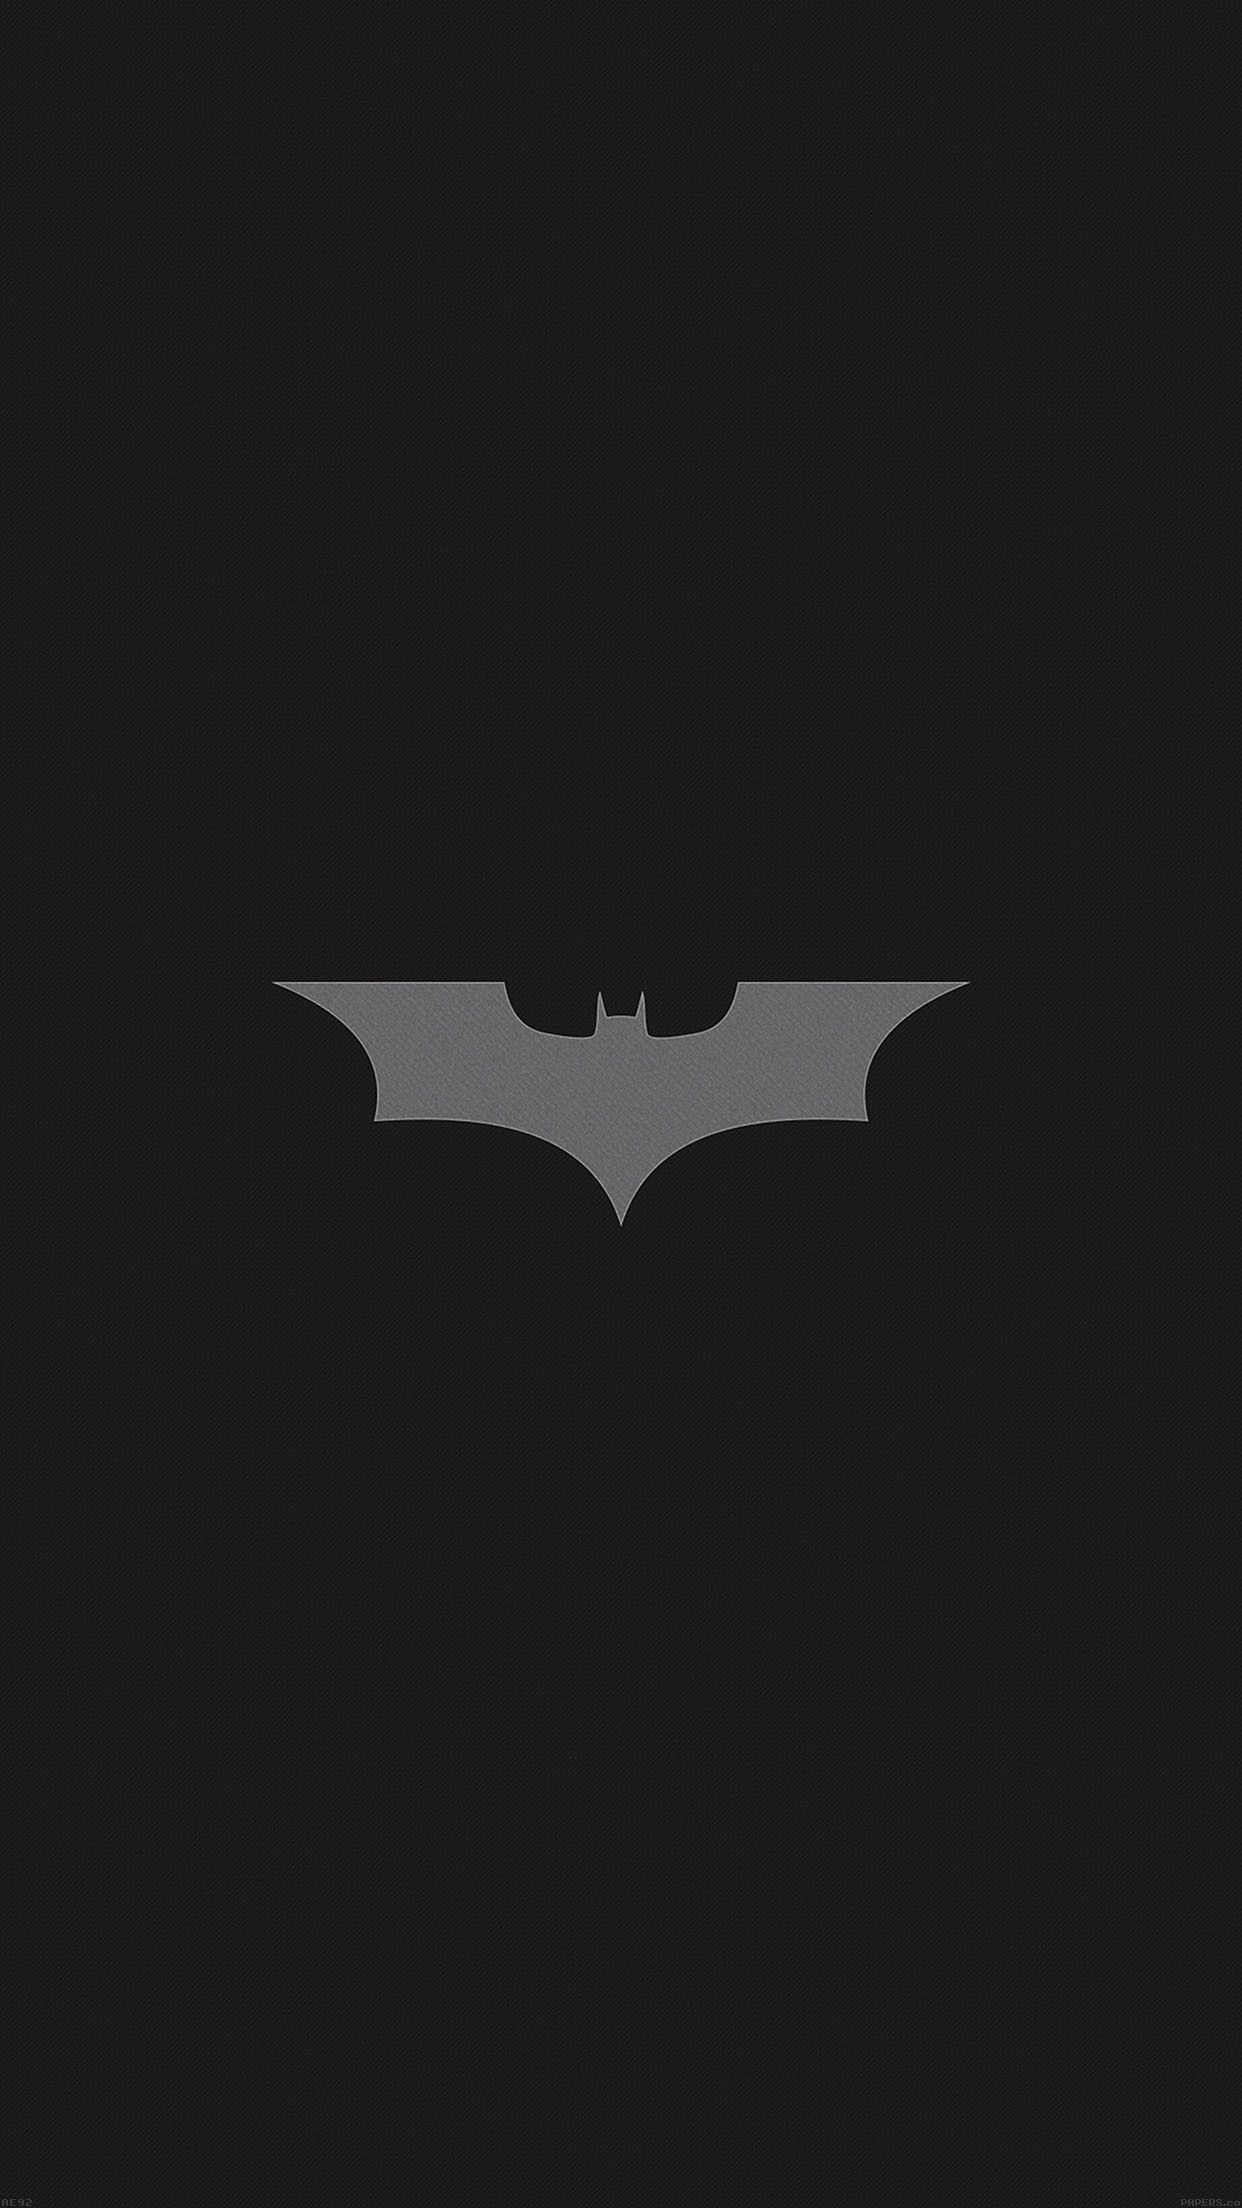 Batman IPhone Wallpaper High Quality WallpaperHD.wiki. Batman